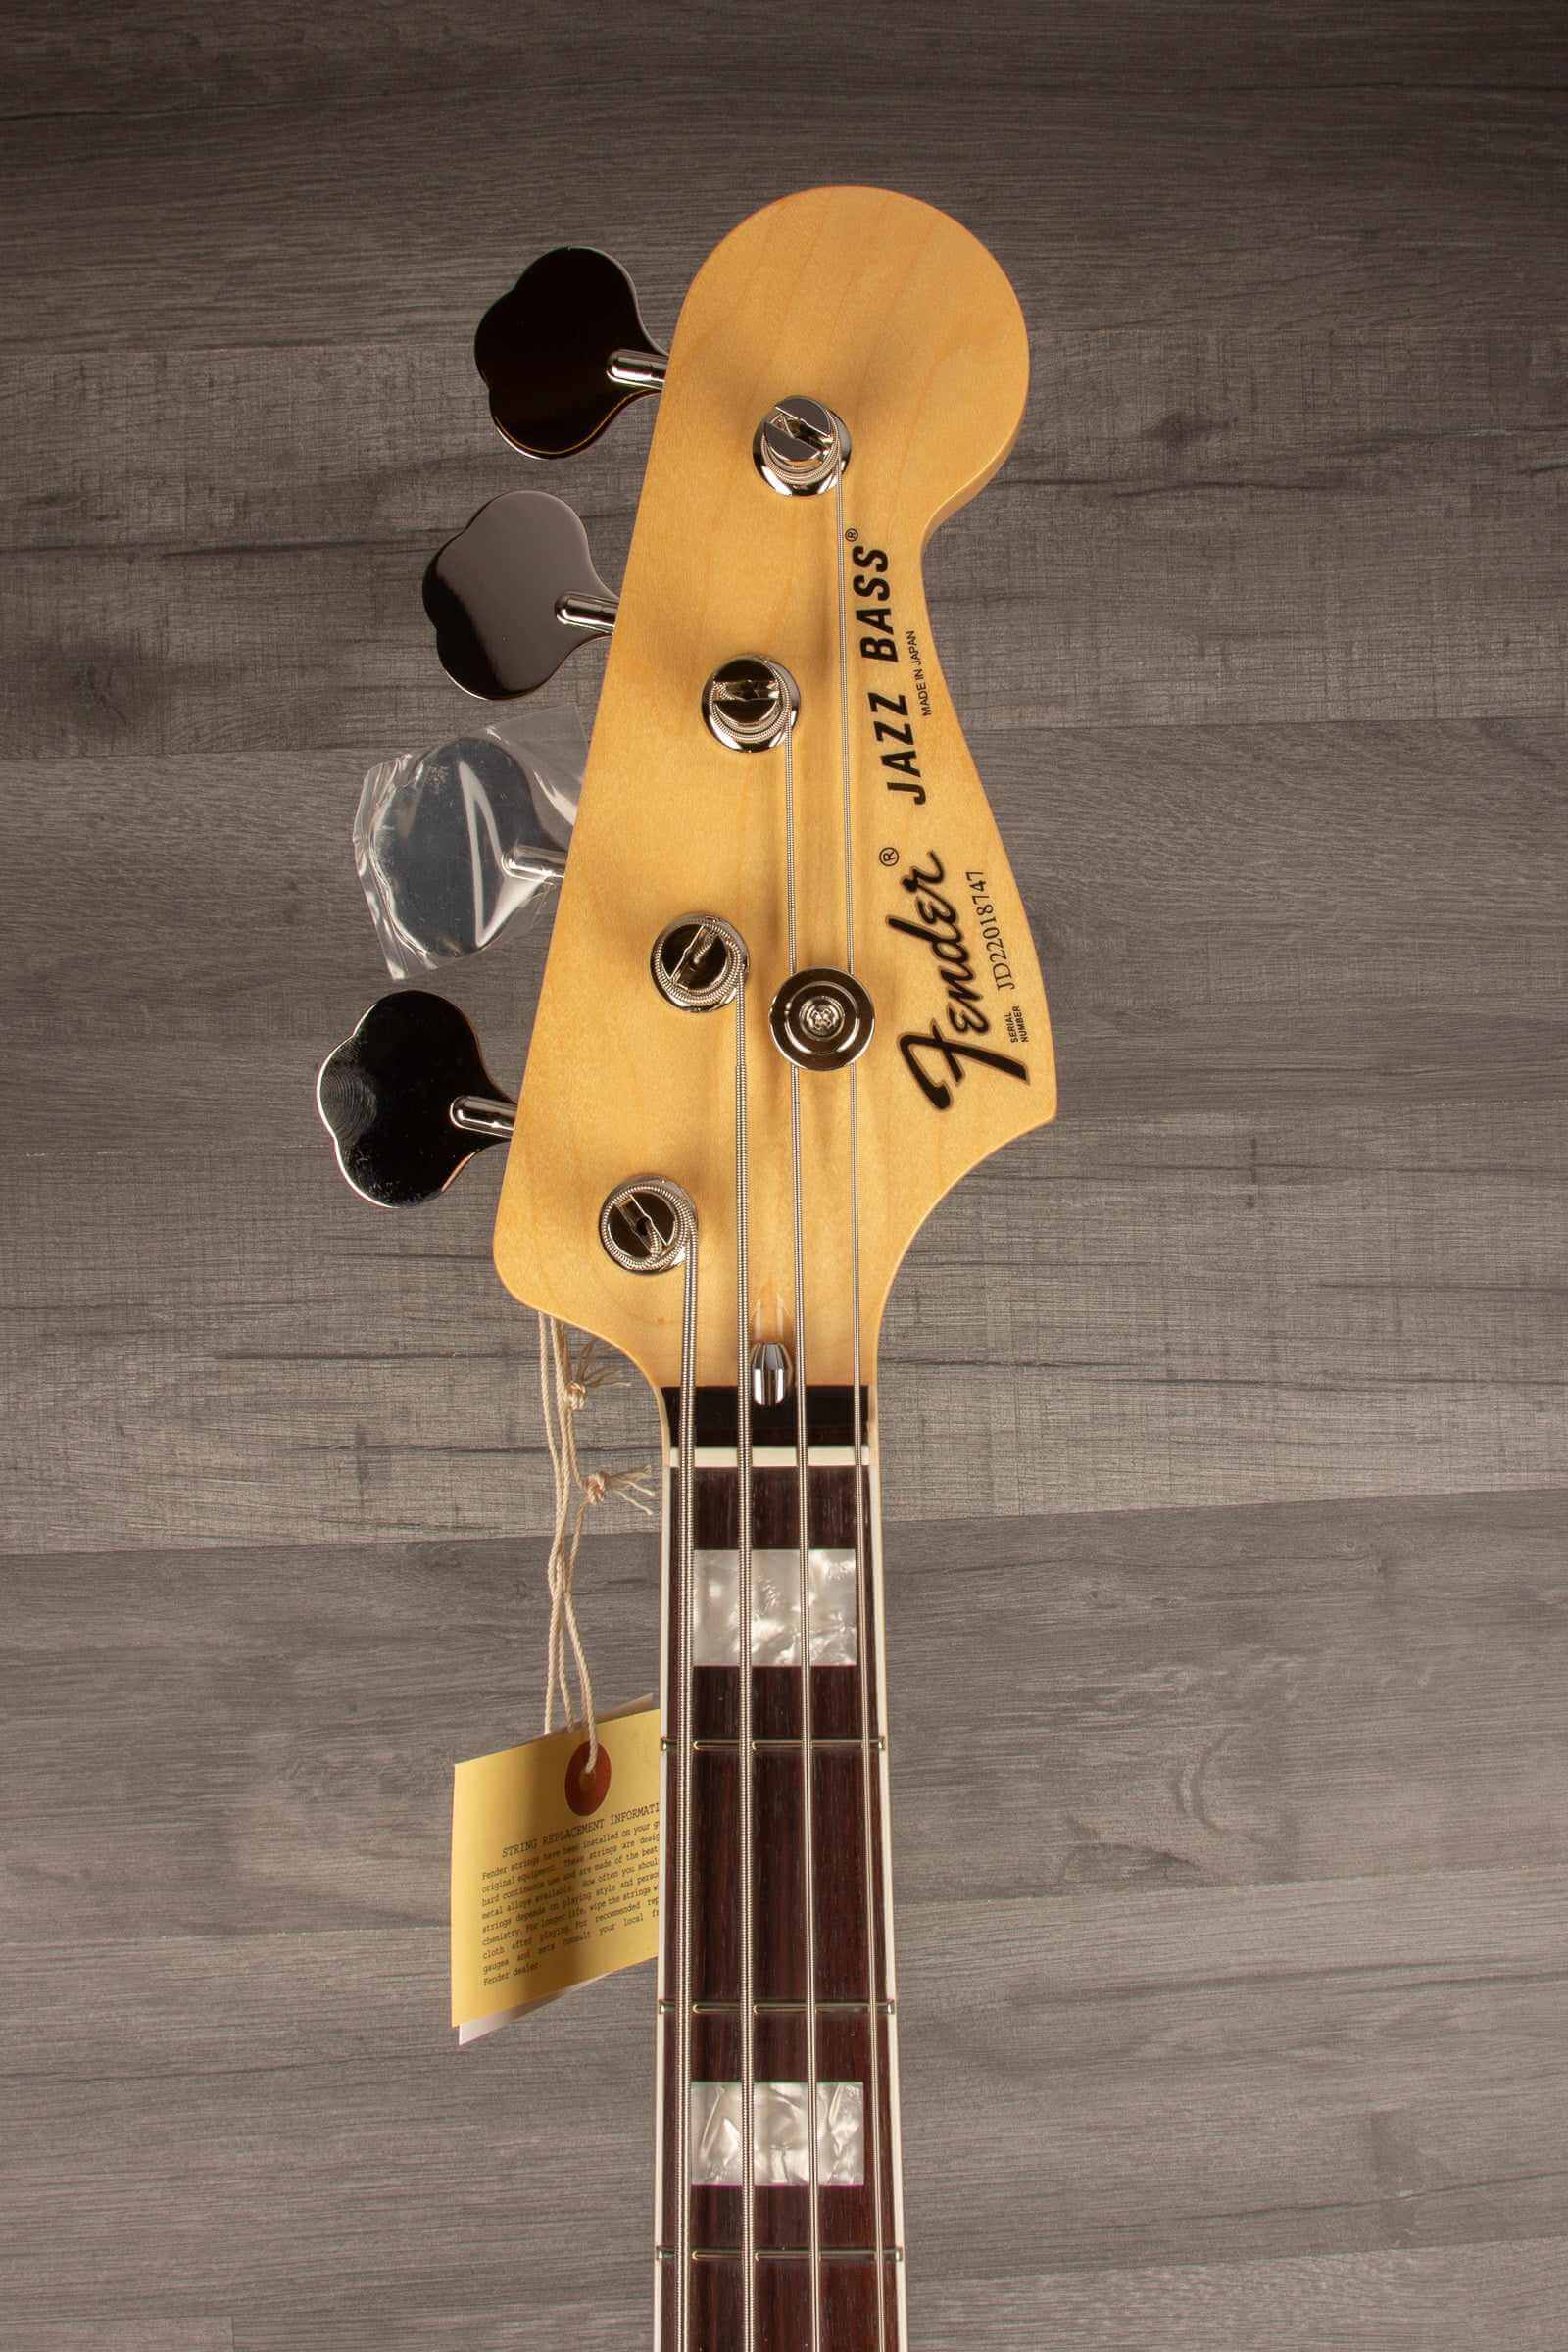 Fender Made in Japan International Color Jazz Bass®, Rosewood Fingerboard, Sienna Sunburst | MusicStreet